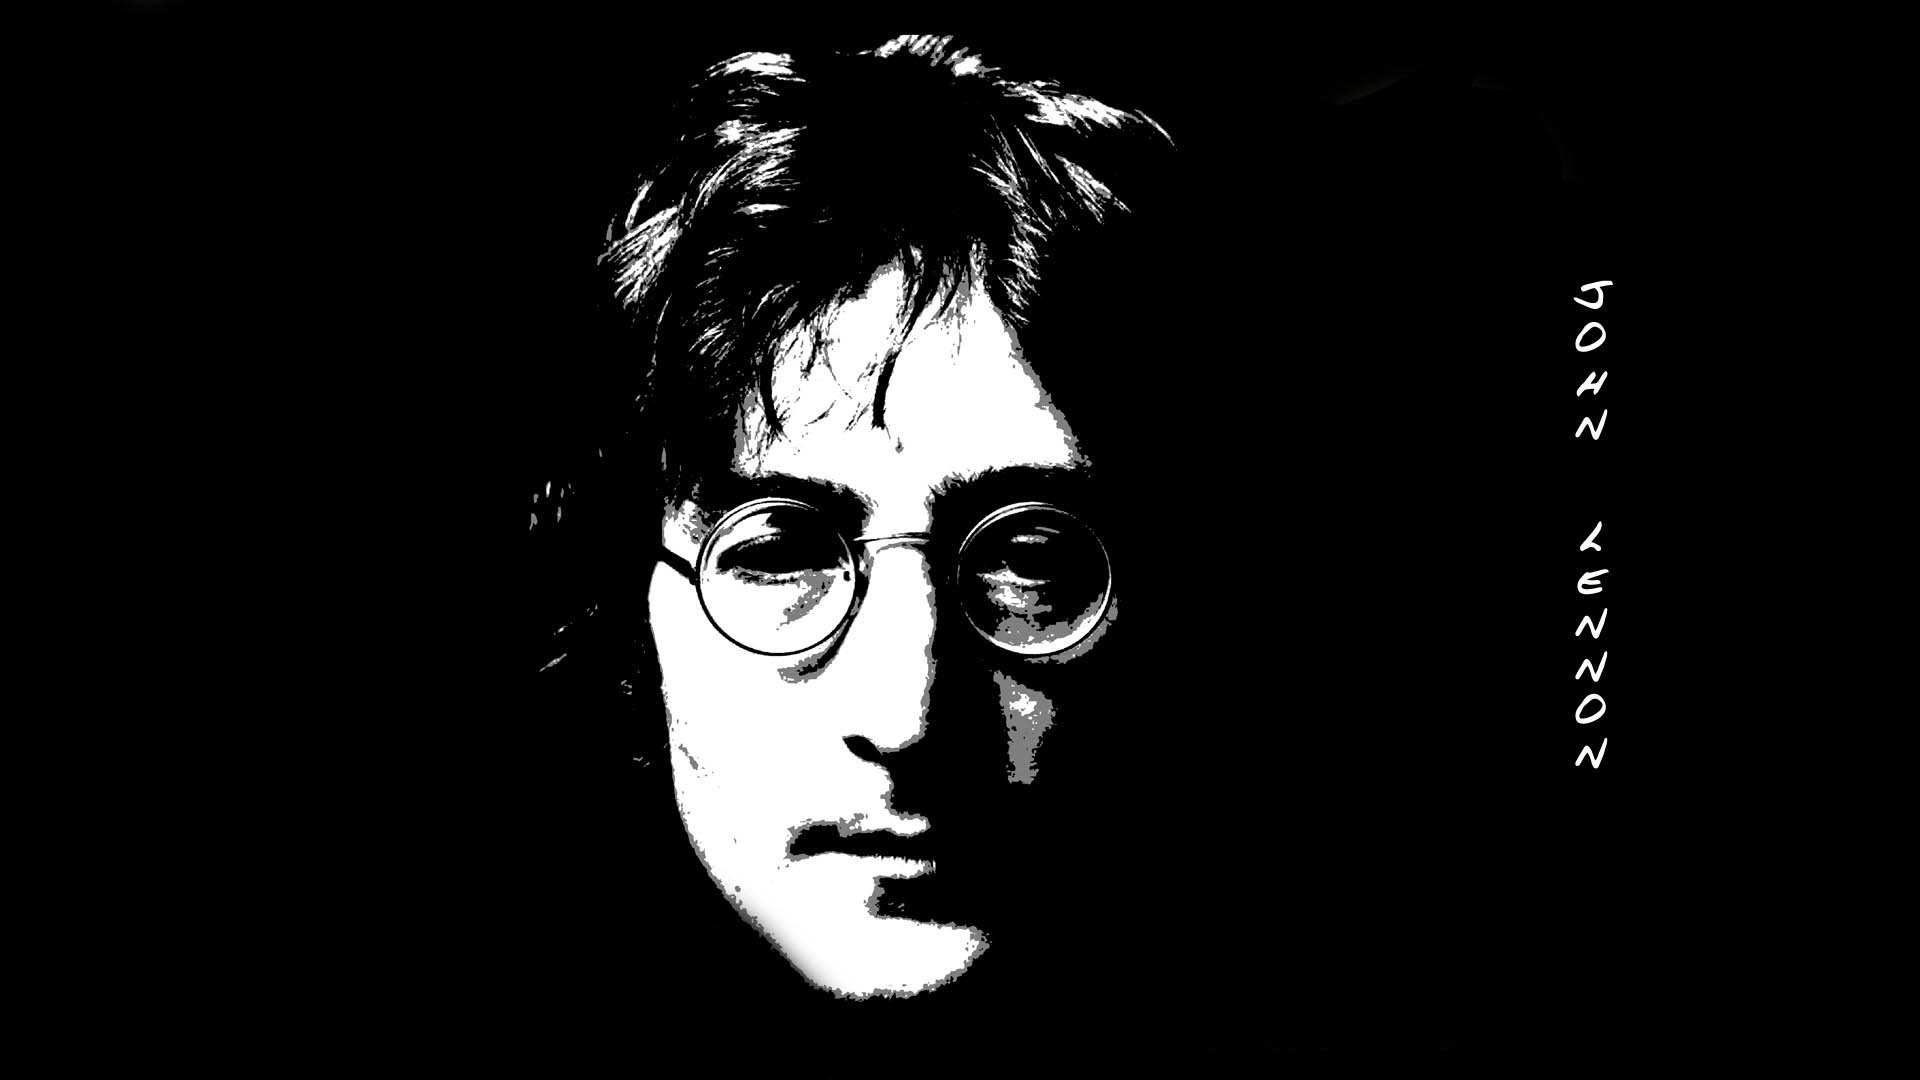 John Lennon Wallpaper Image Photos Pictures Background